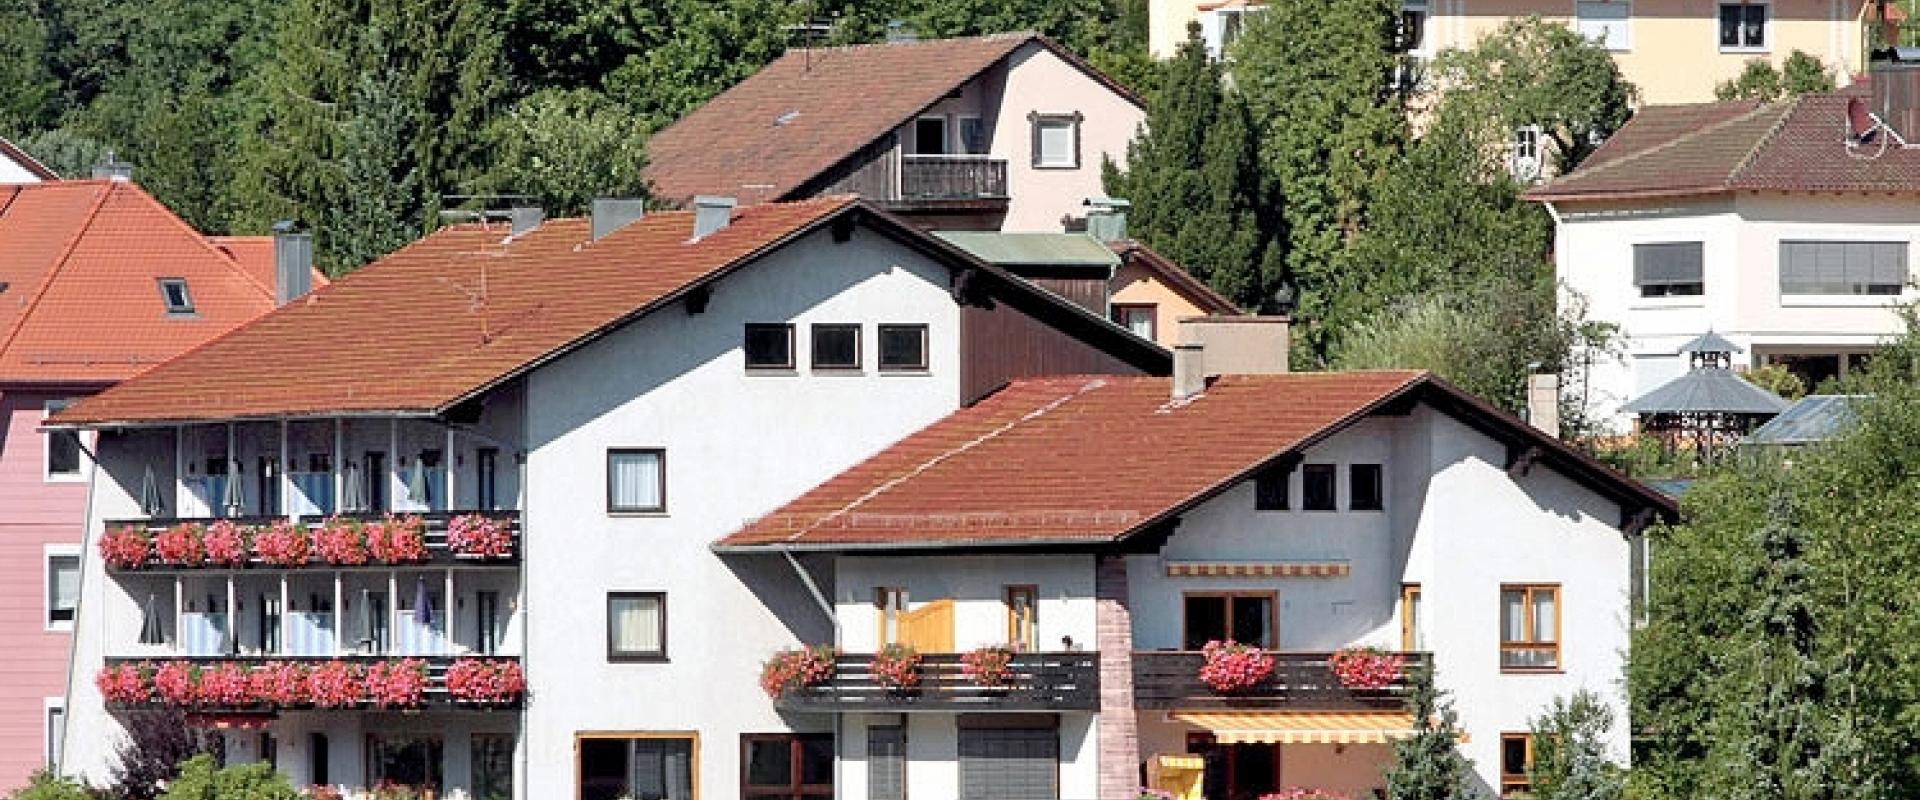 Aparthotel Schwarzwald Panorama Bad Wildbad 16057 5731f595dee01698643502.jpg